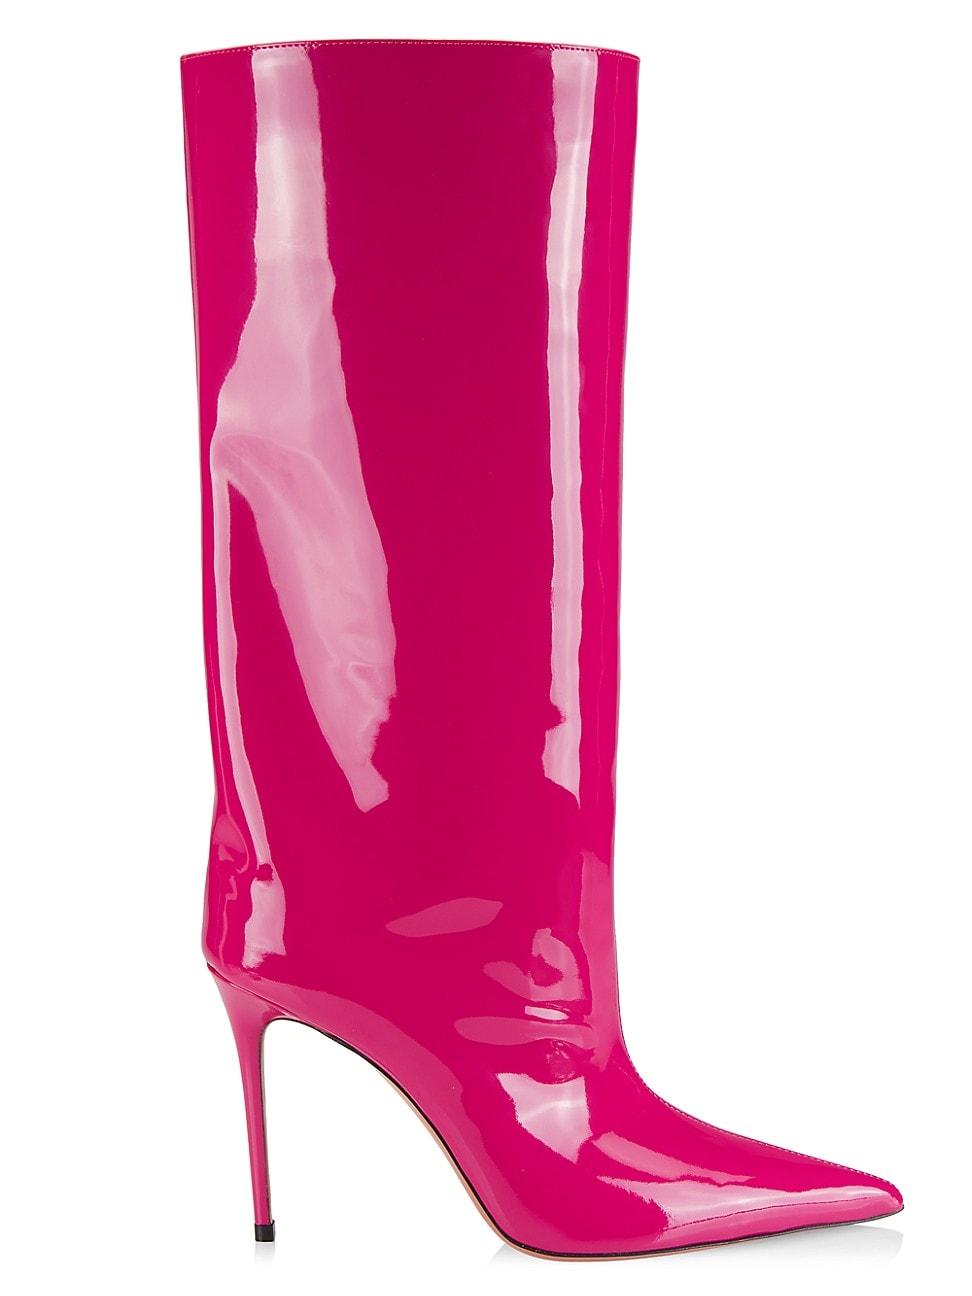 AMINA MUADDI Fiona Patent Leather Stiletto Boots in Pink | Lyst